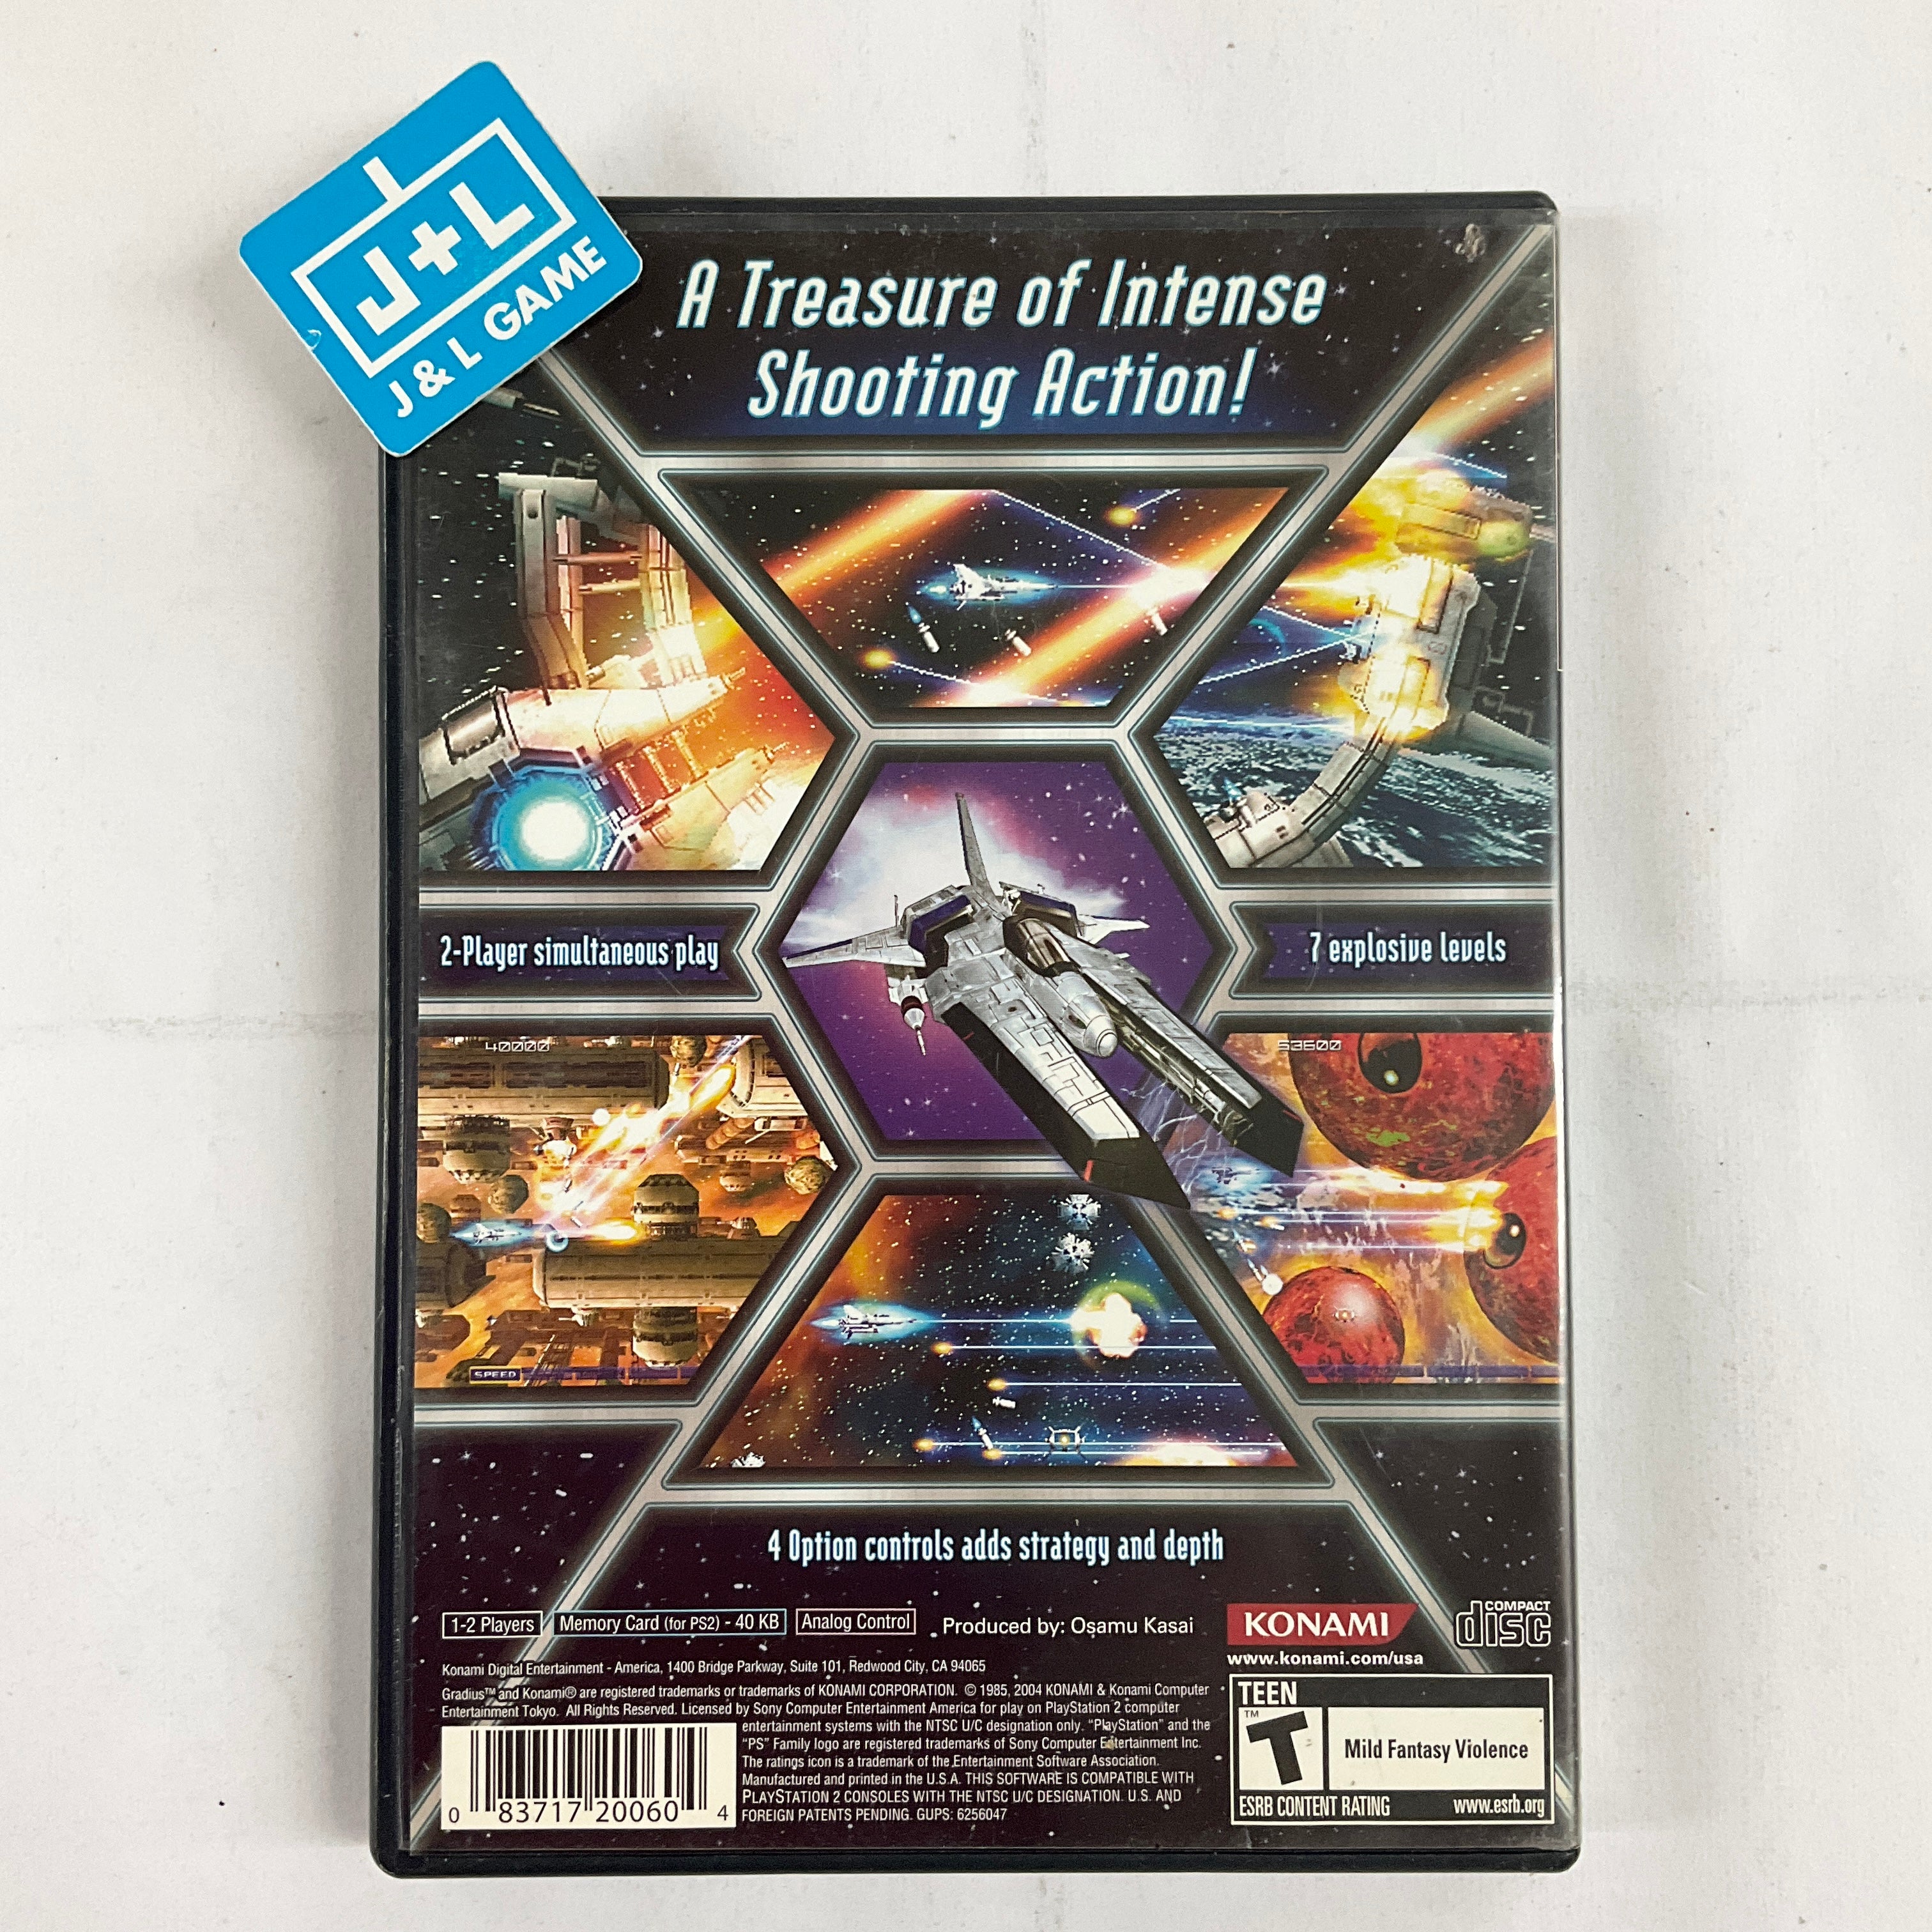 Gradius V - (PS2) PlayStation 2 [Pre-Owned] Video Games Konami   